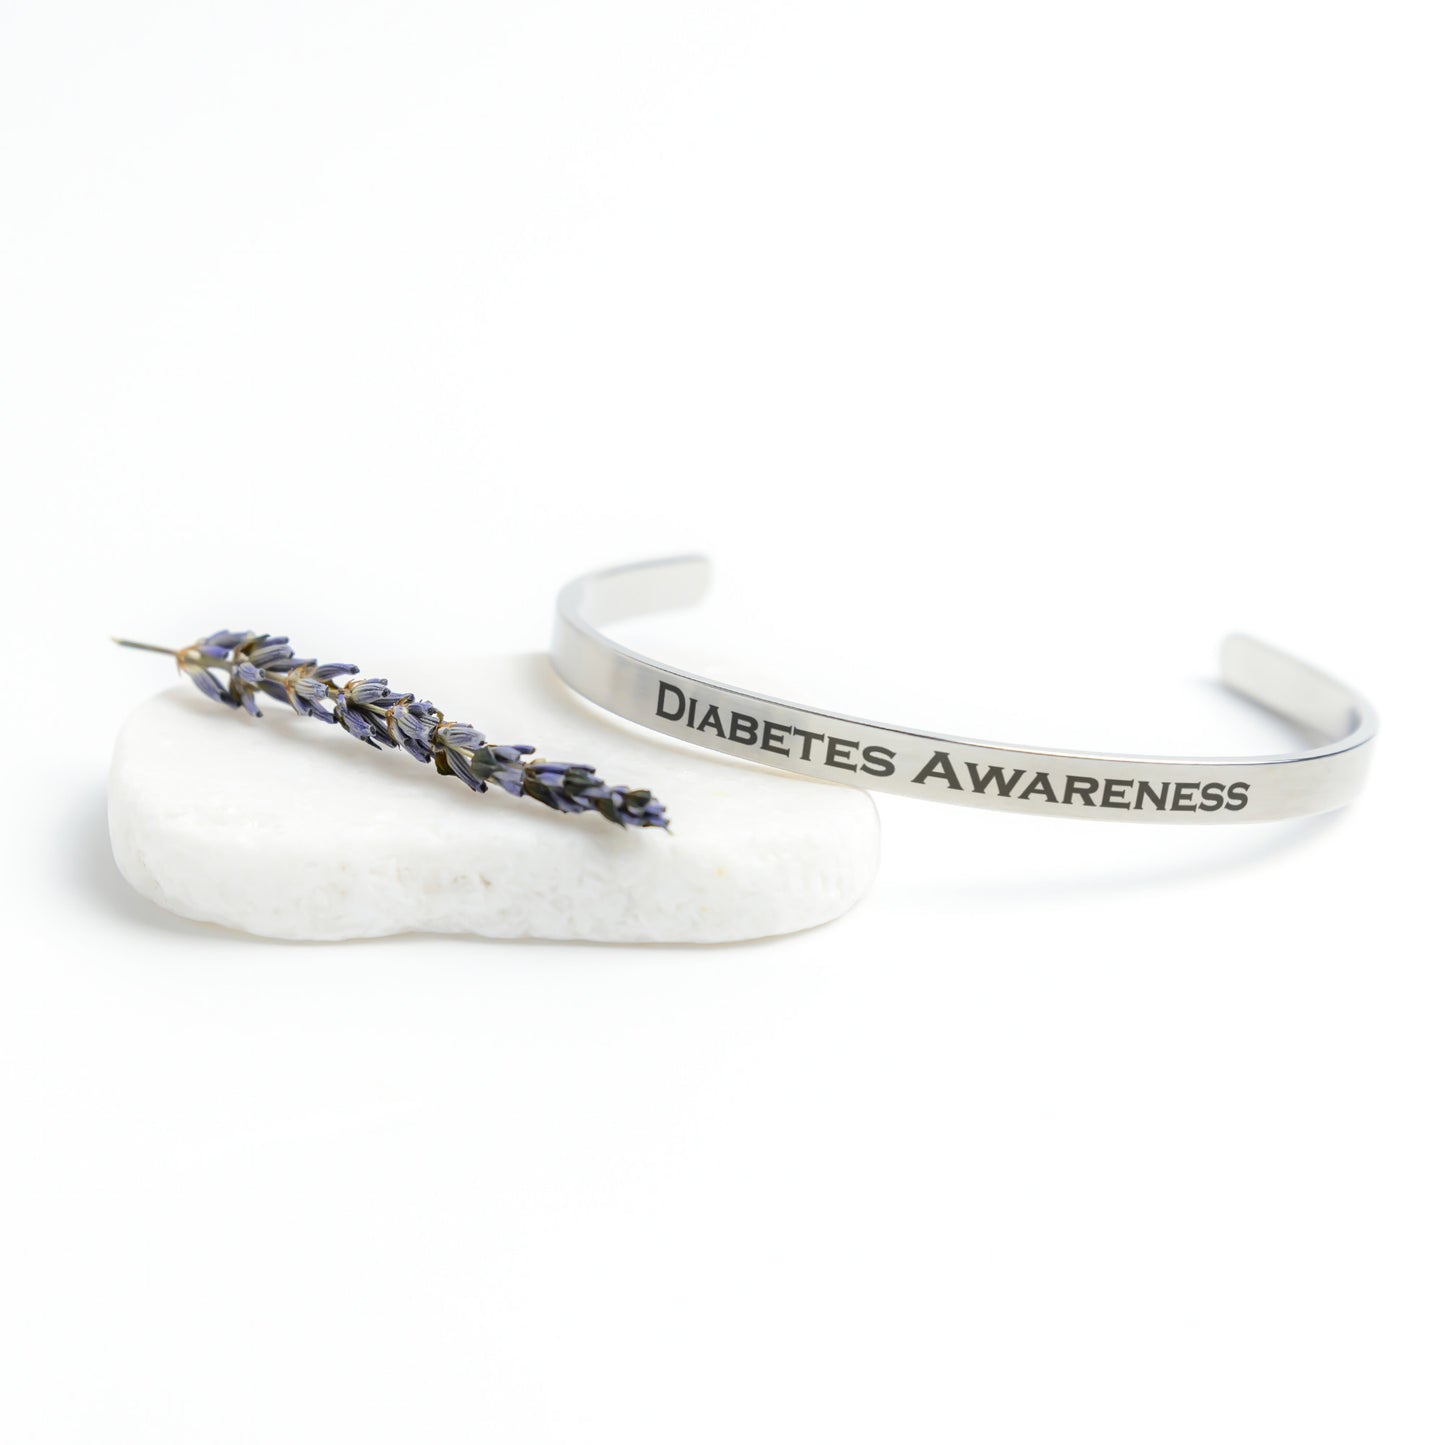 Personalized Diabetes Awareness Cuff Bracelet